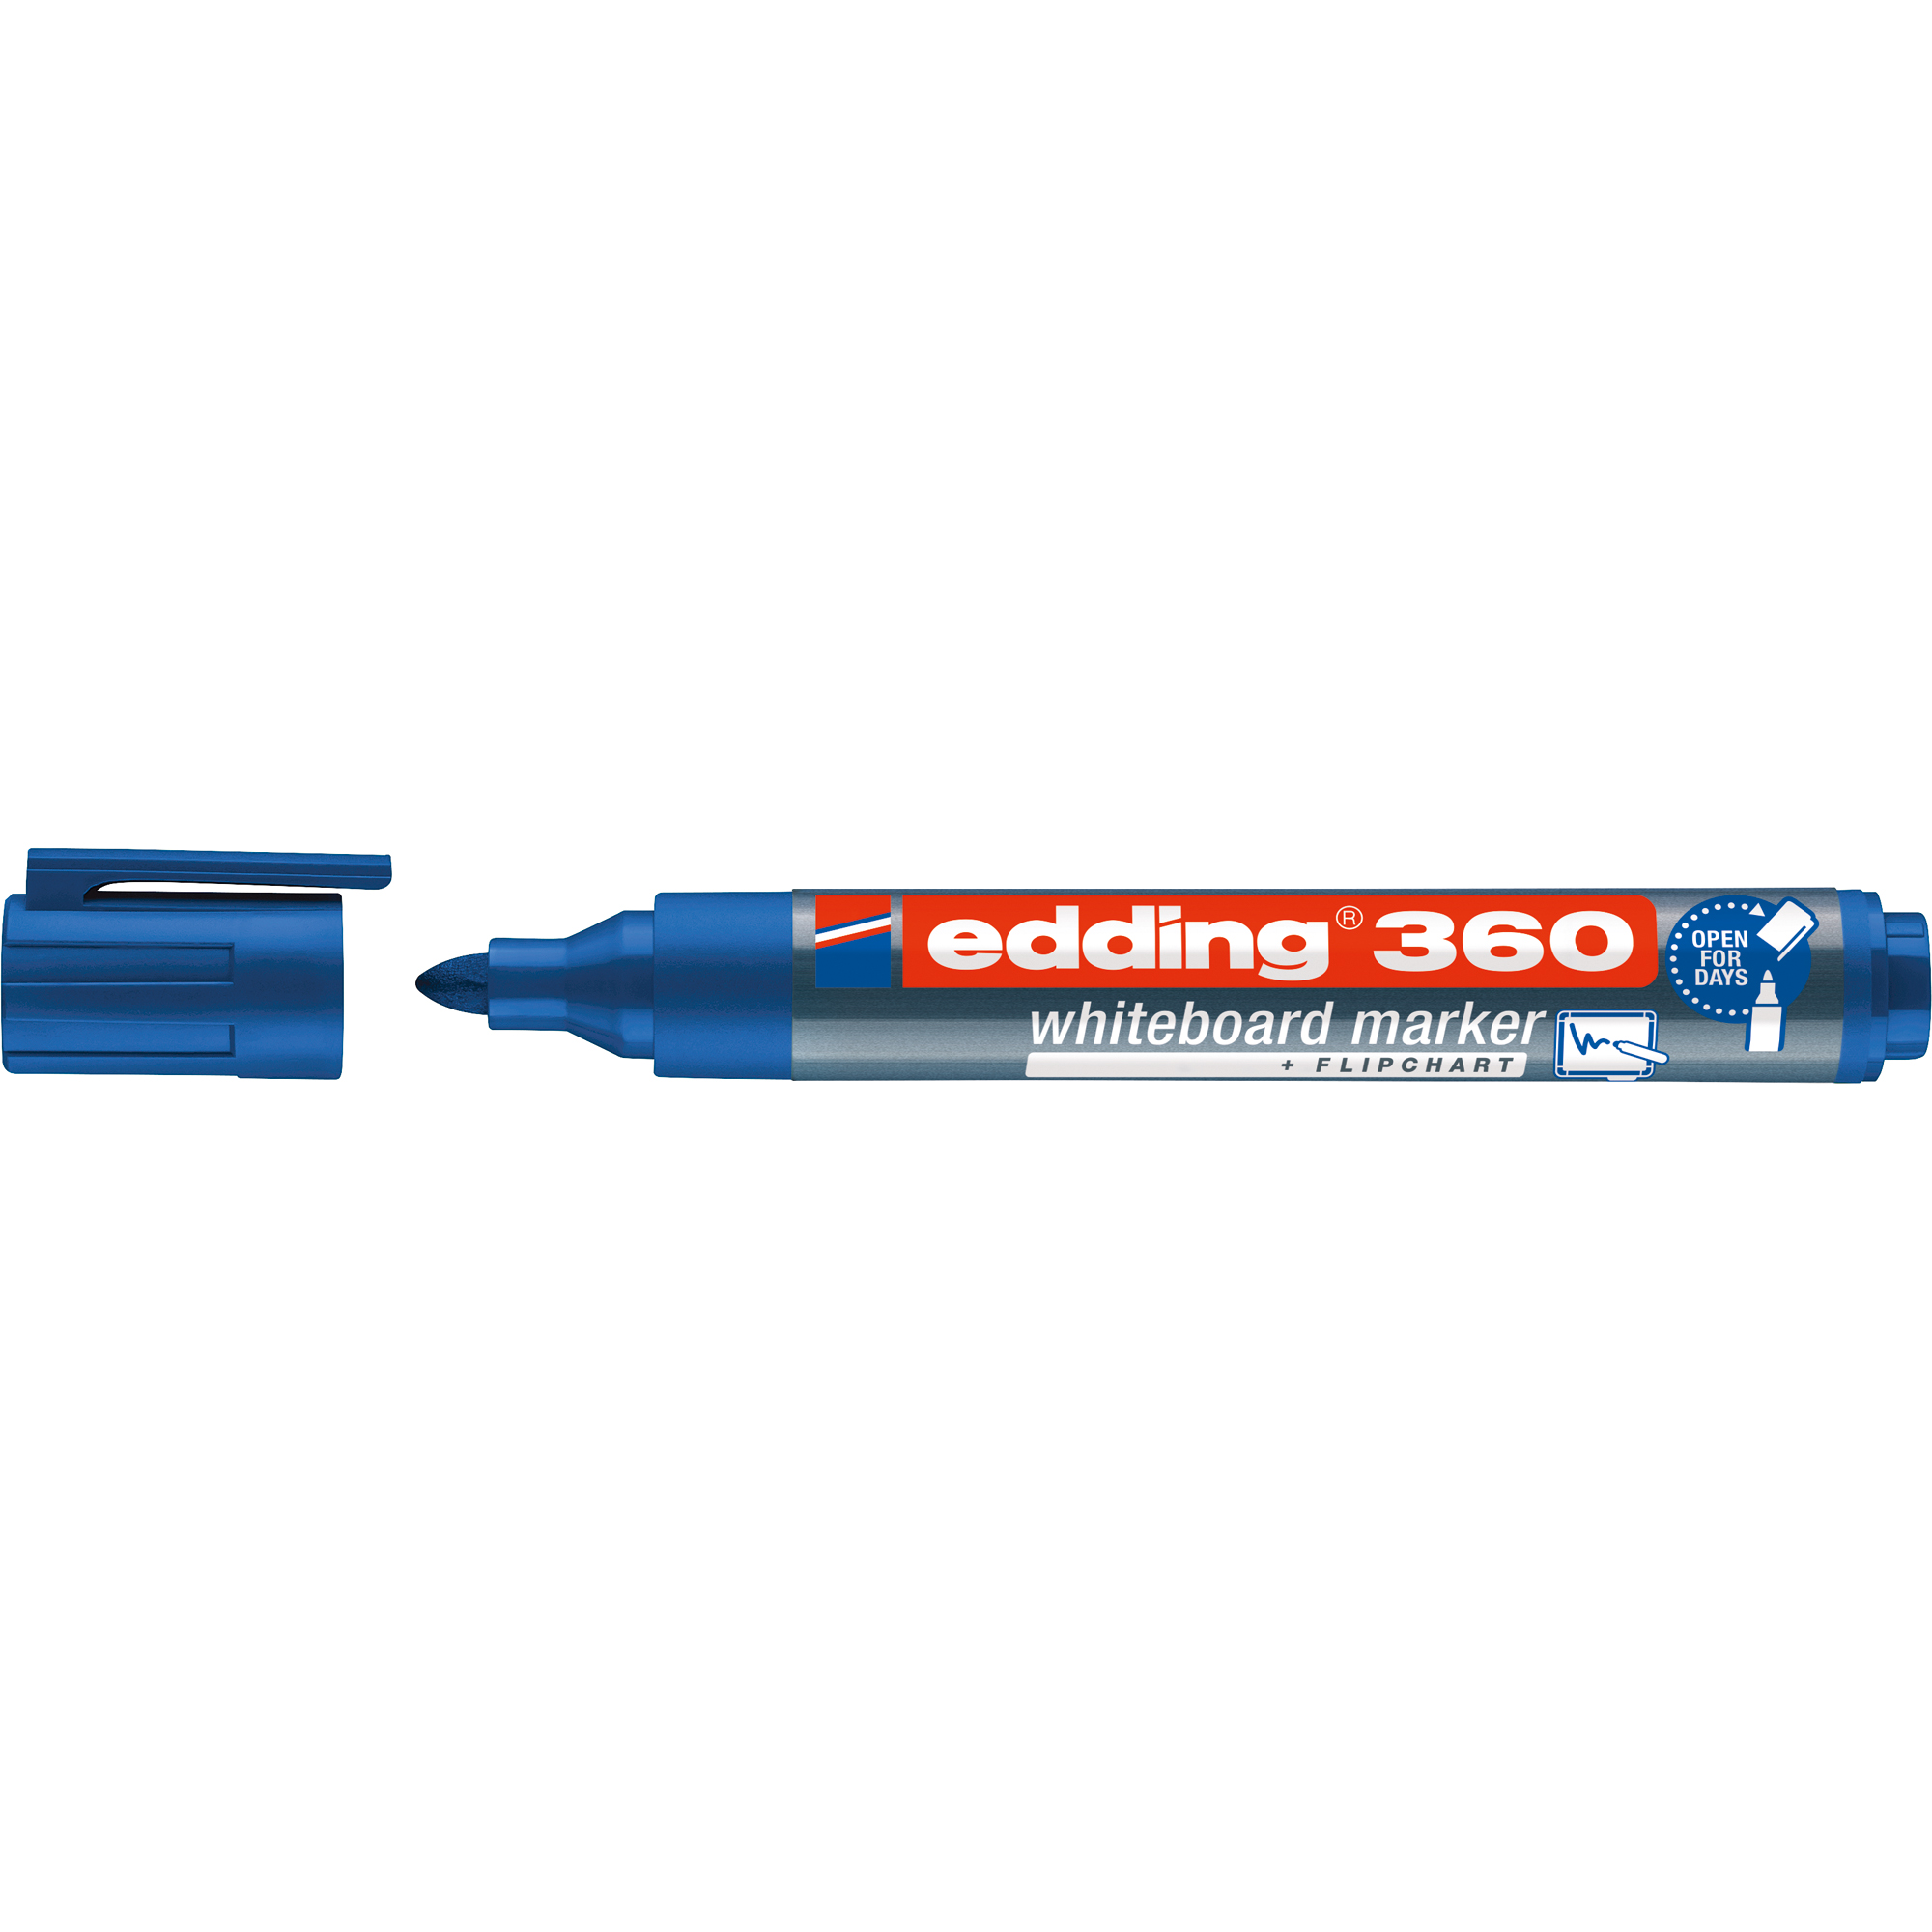 Rundspitze blau 1,5-3mm 360 nachfüllbar Boardmarker EDDING Whiteboardmarker,